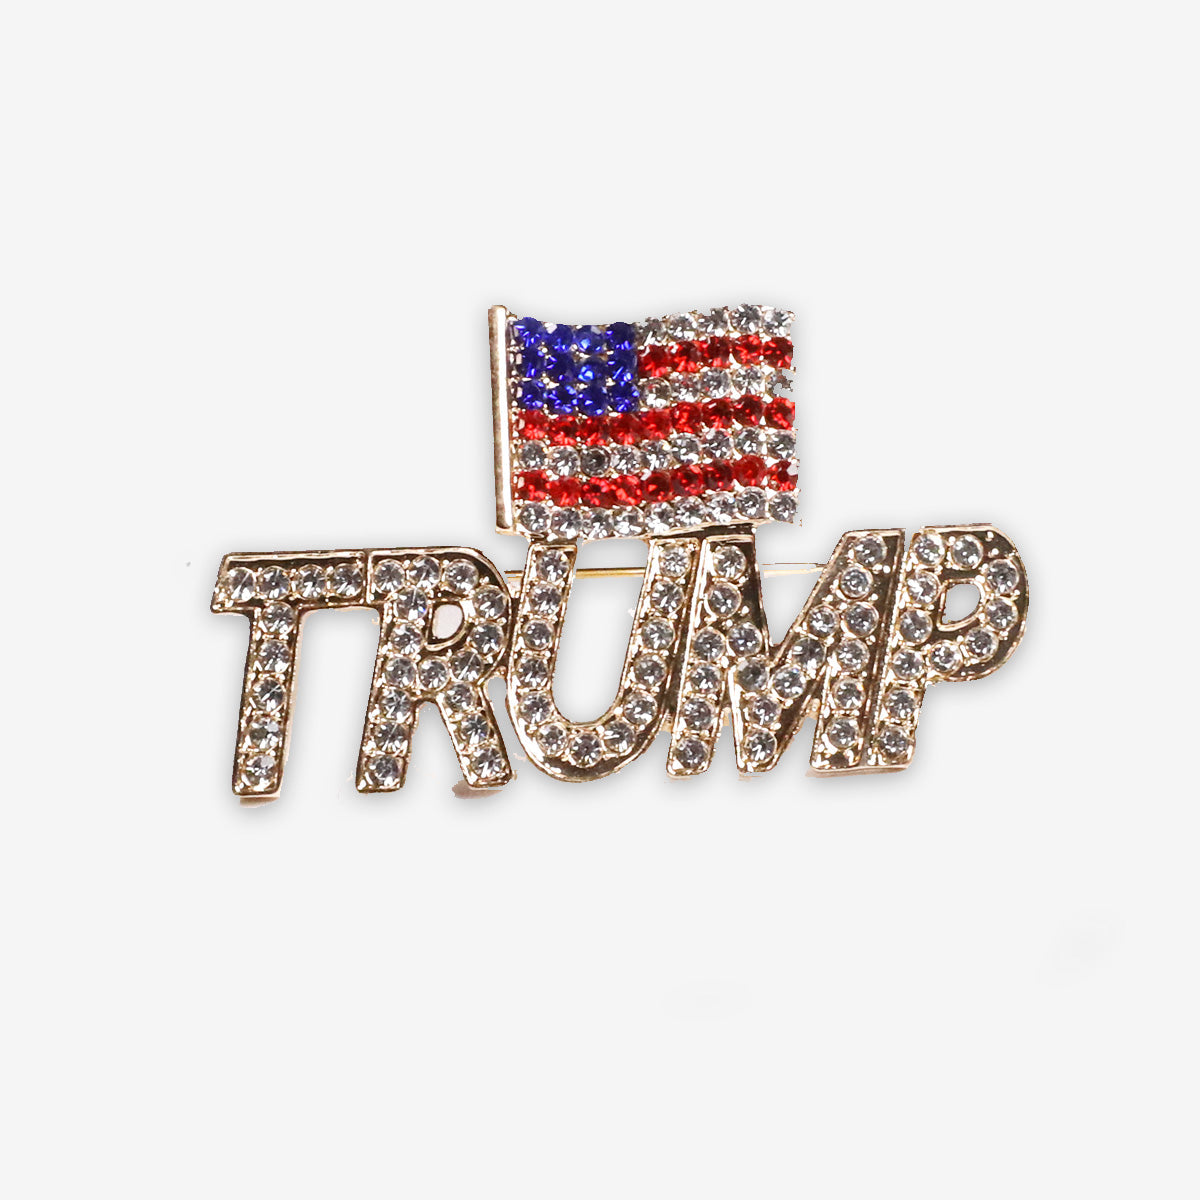 Crystal Trump Pin with The USA Flag